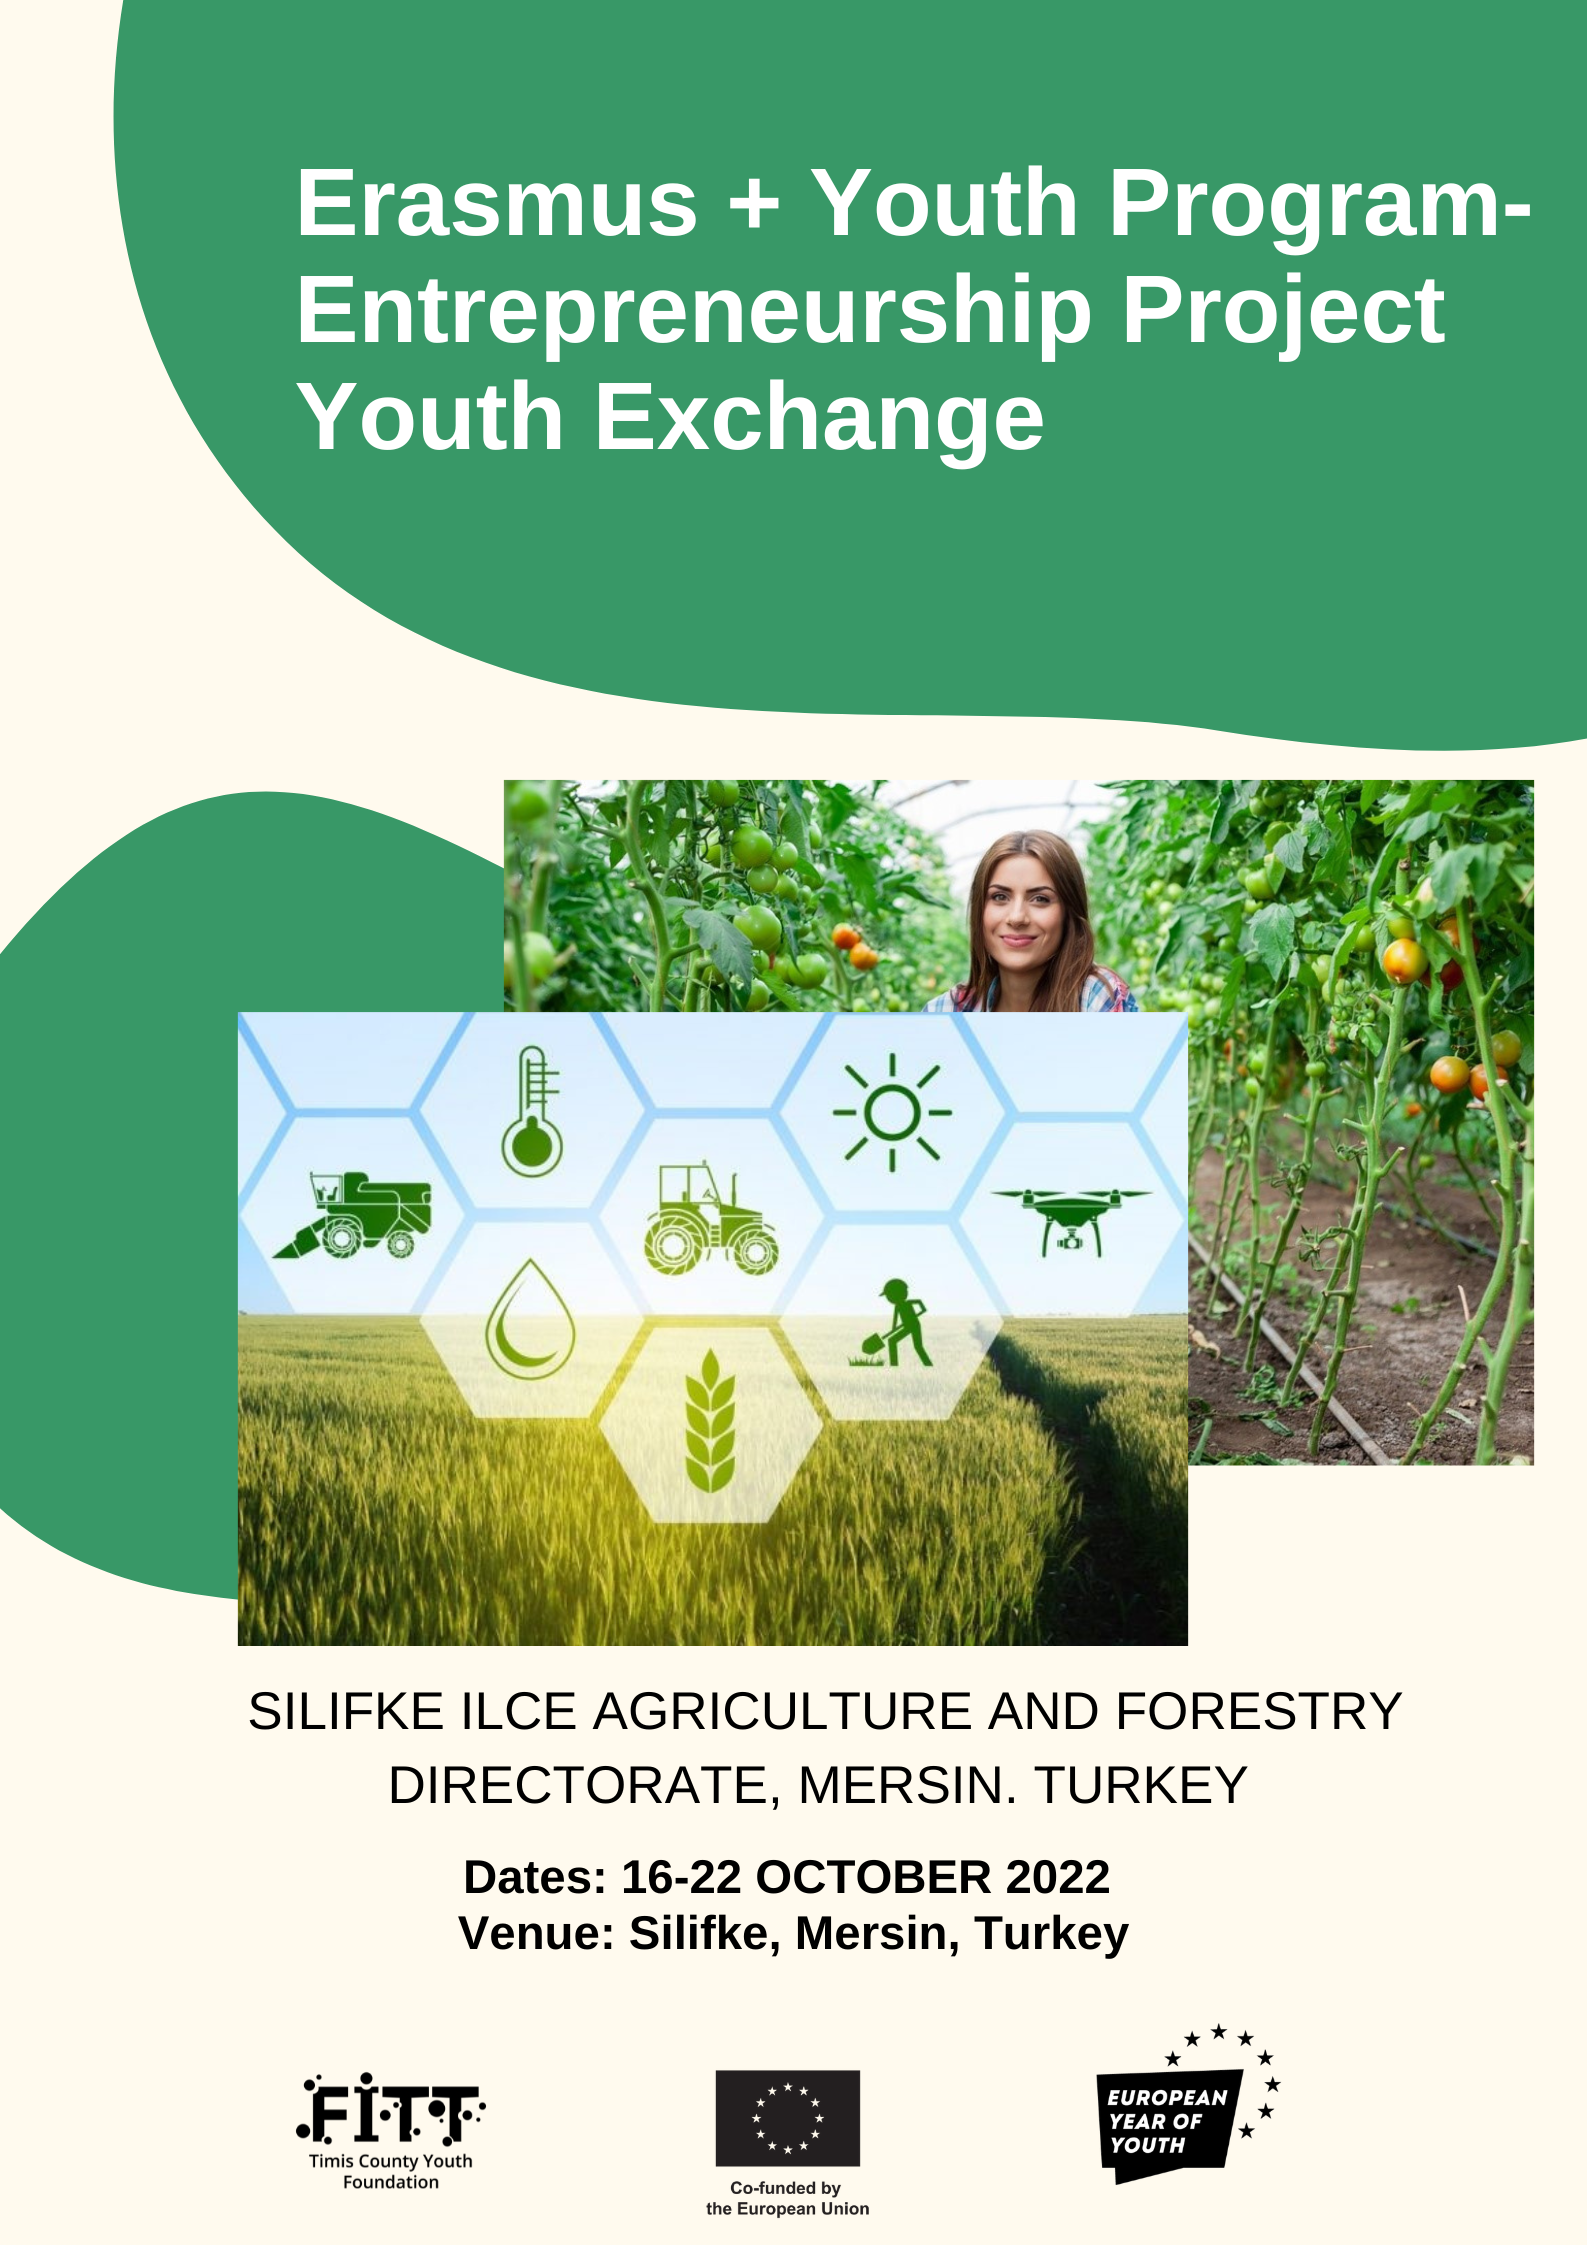 Entrepreneurship project-Youth Exchange